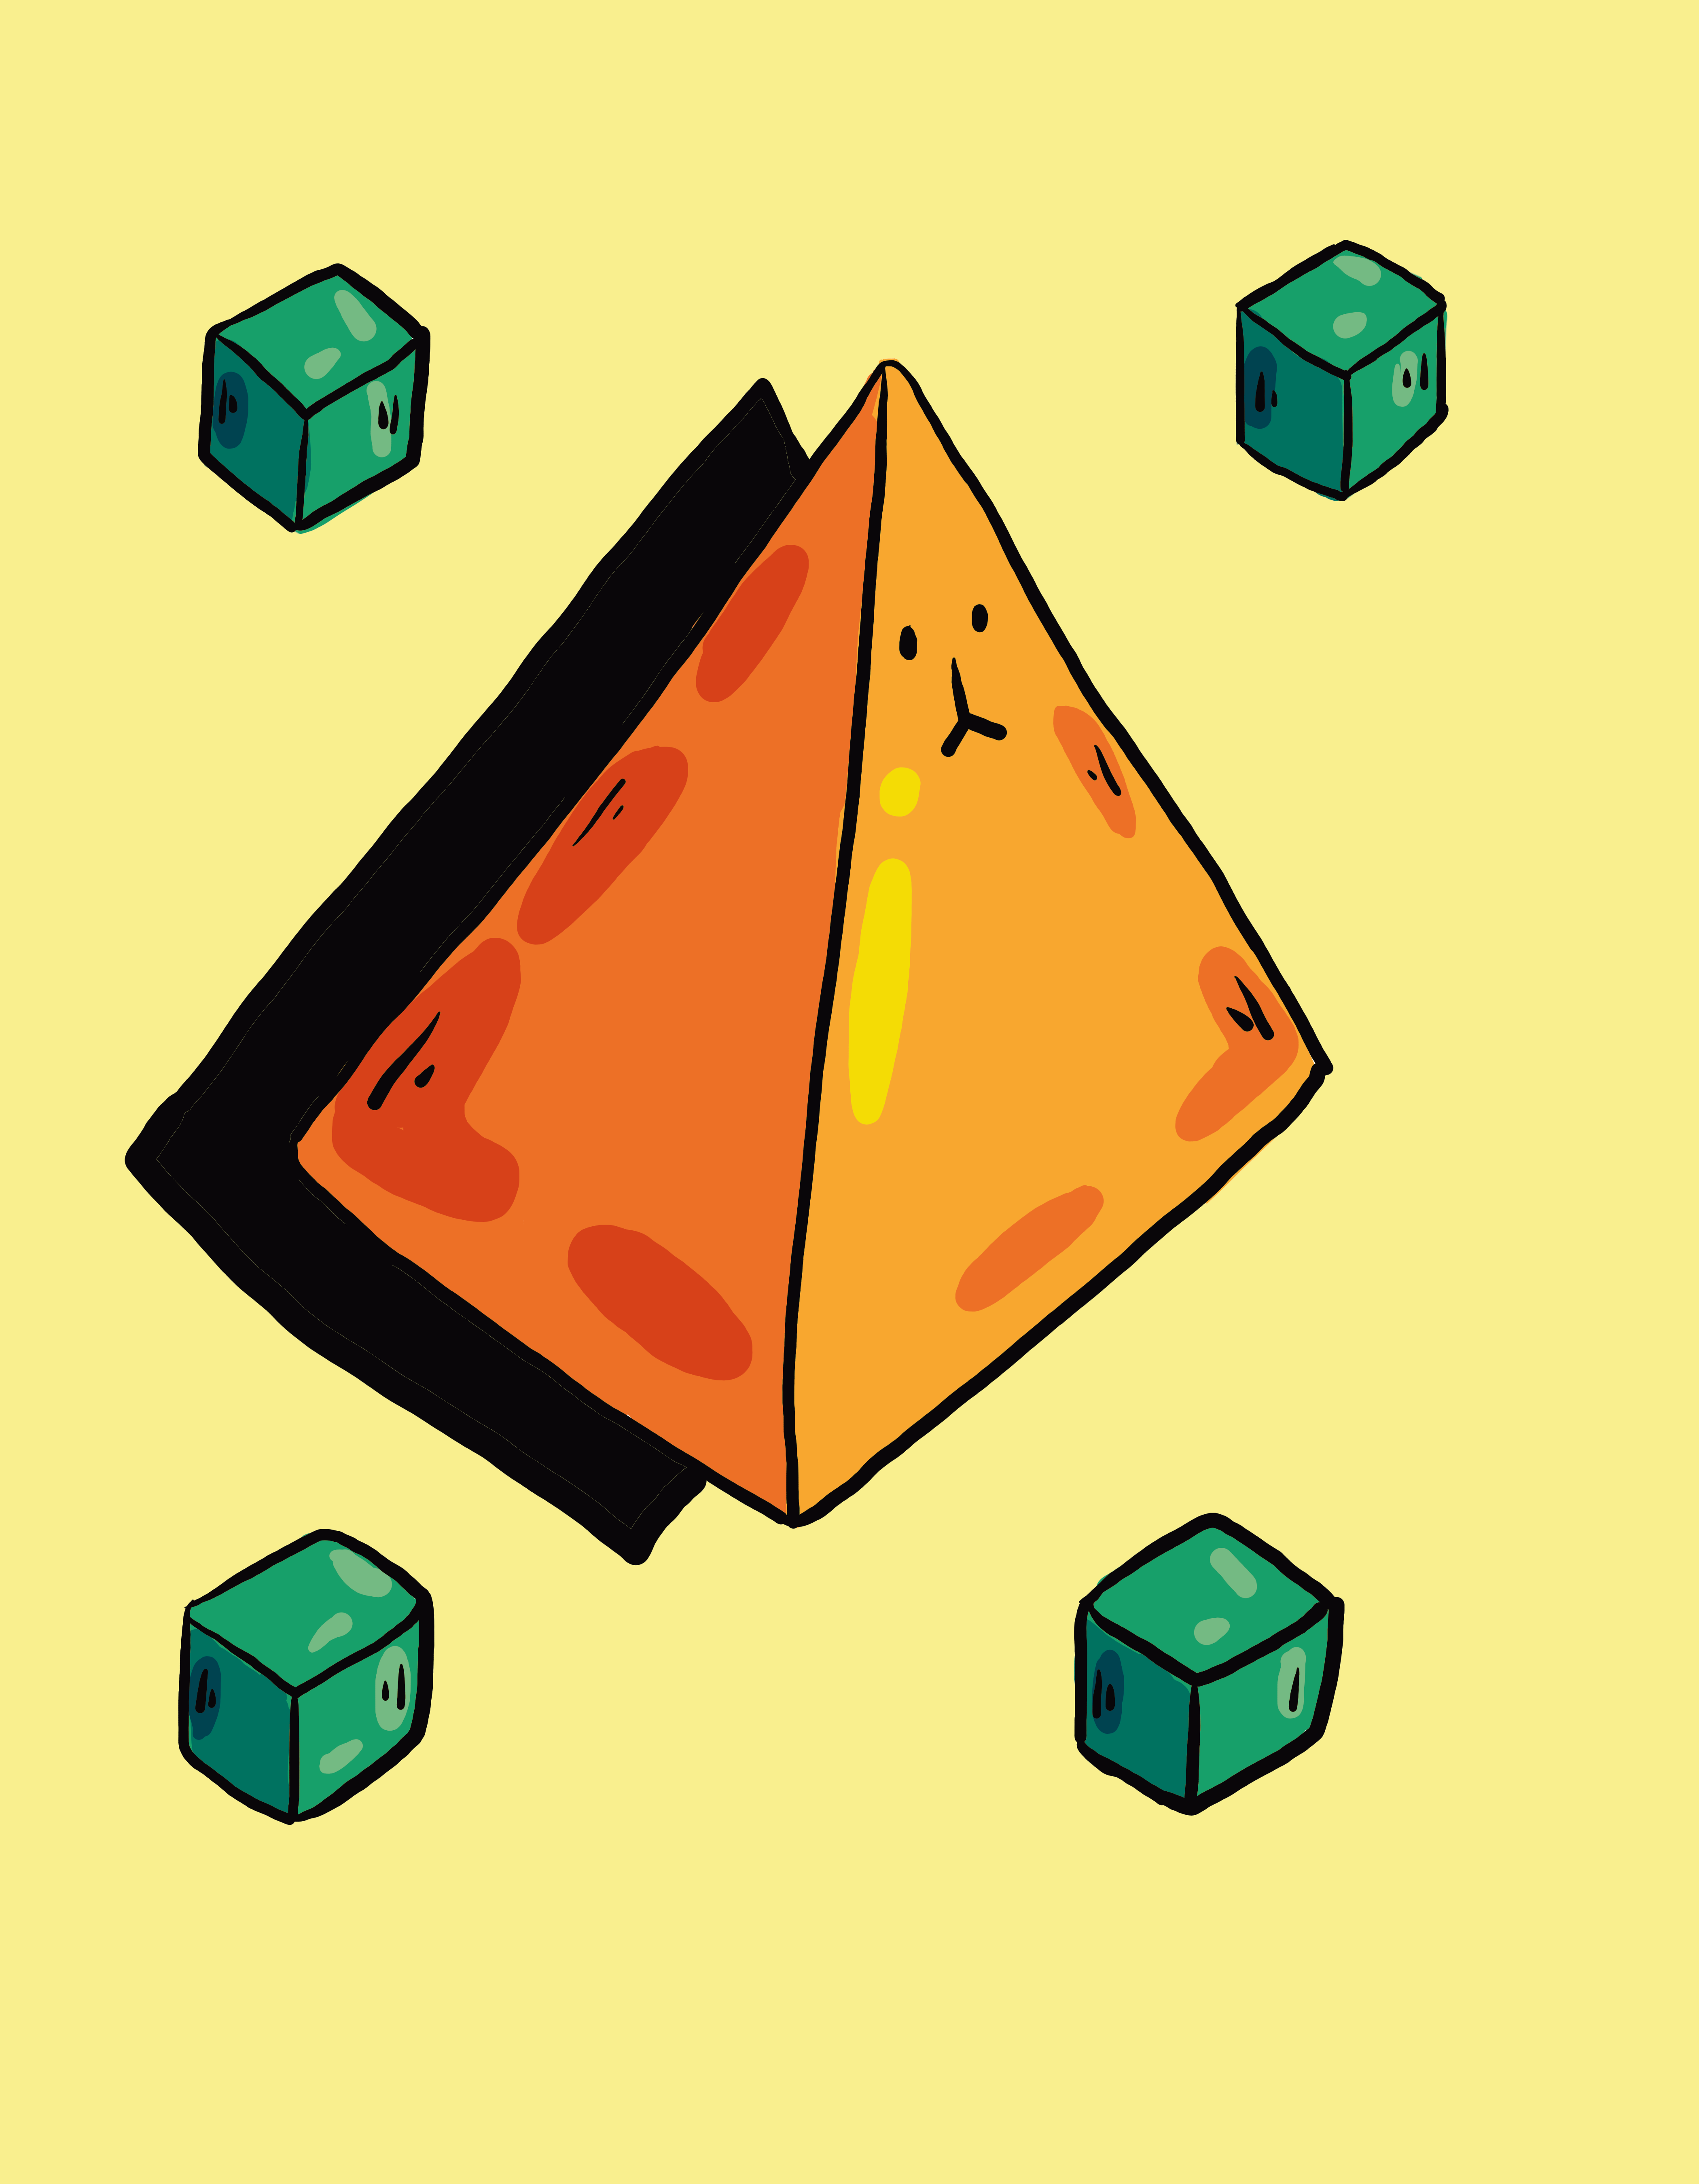 a pyramid